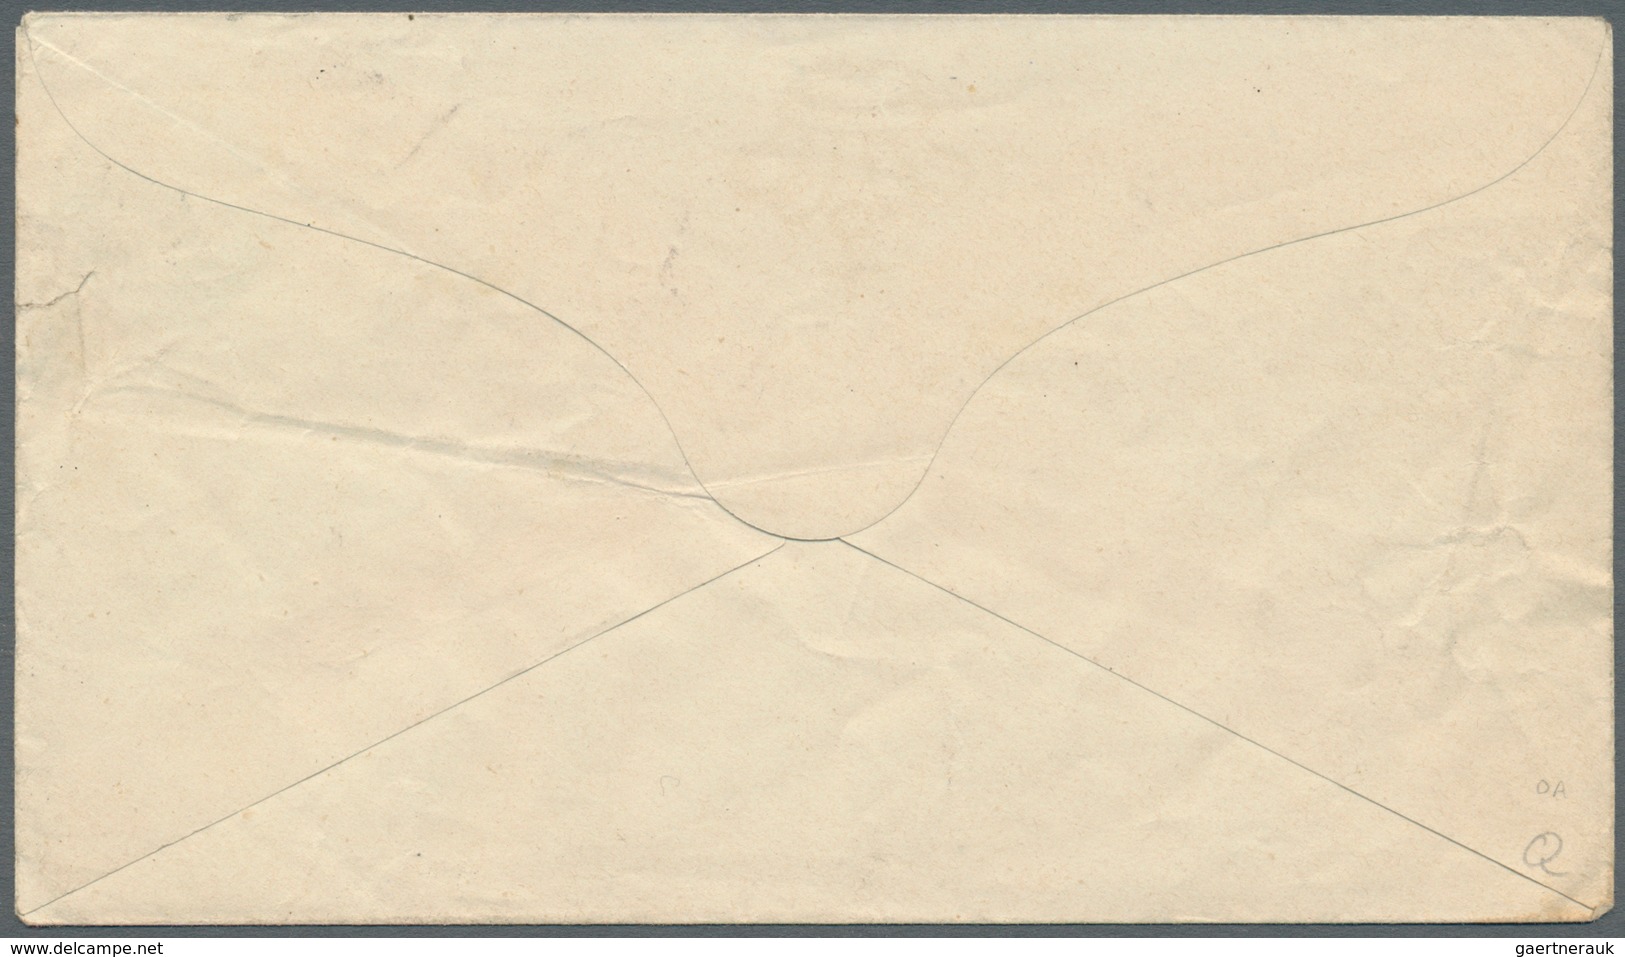 Dänisch-Westindien: 1883, 2 C Blue Postal Stationery Envelope (small Faults/tear), Addressed To The - Danemark (Antilles)